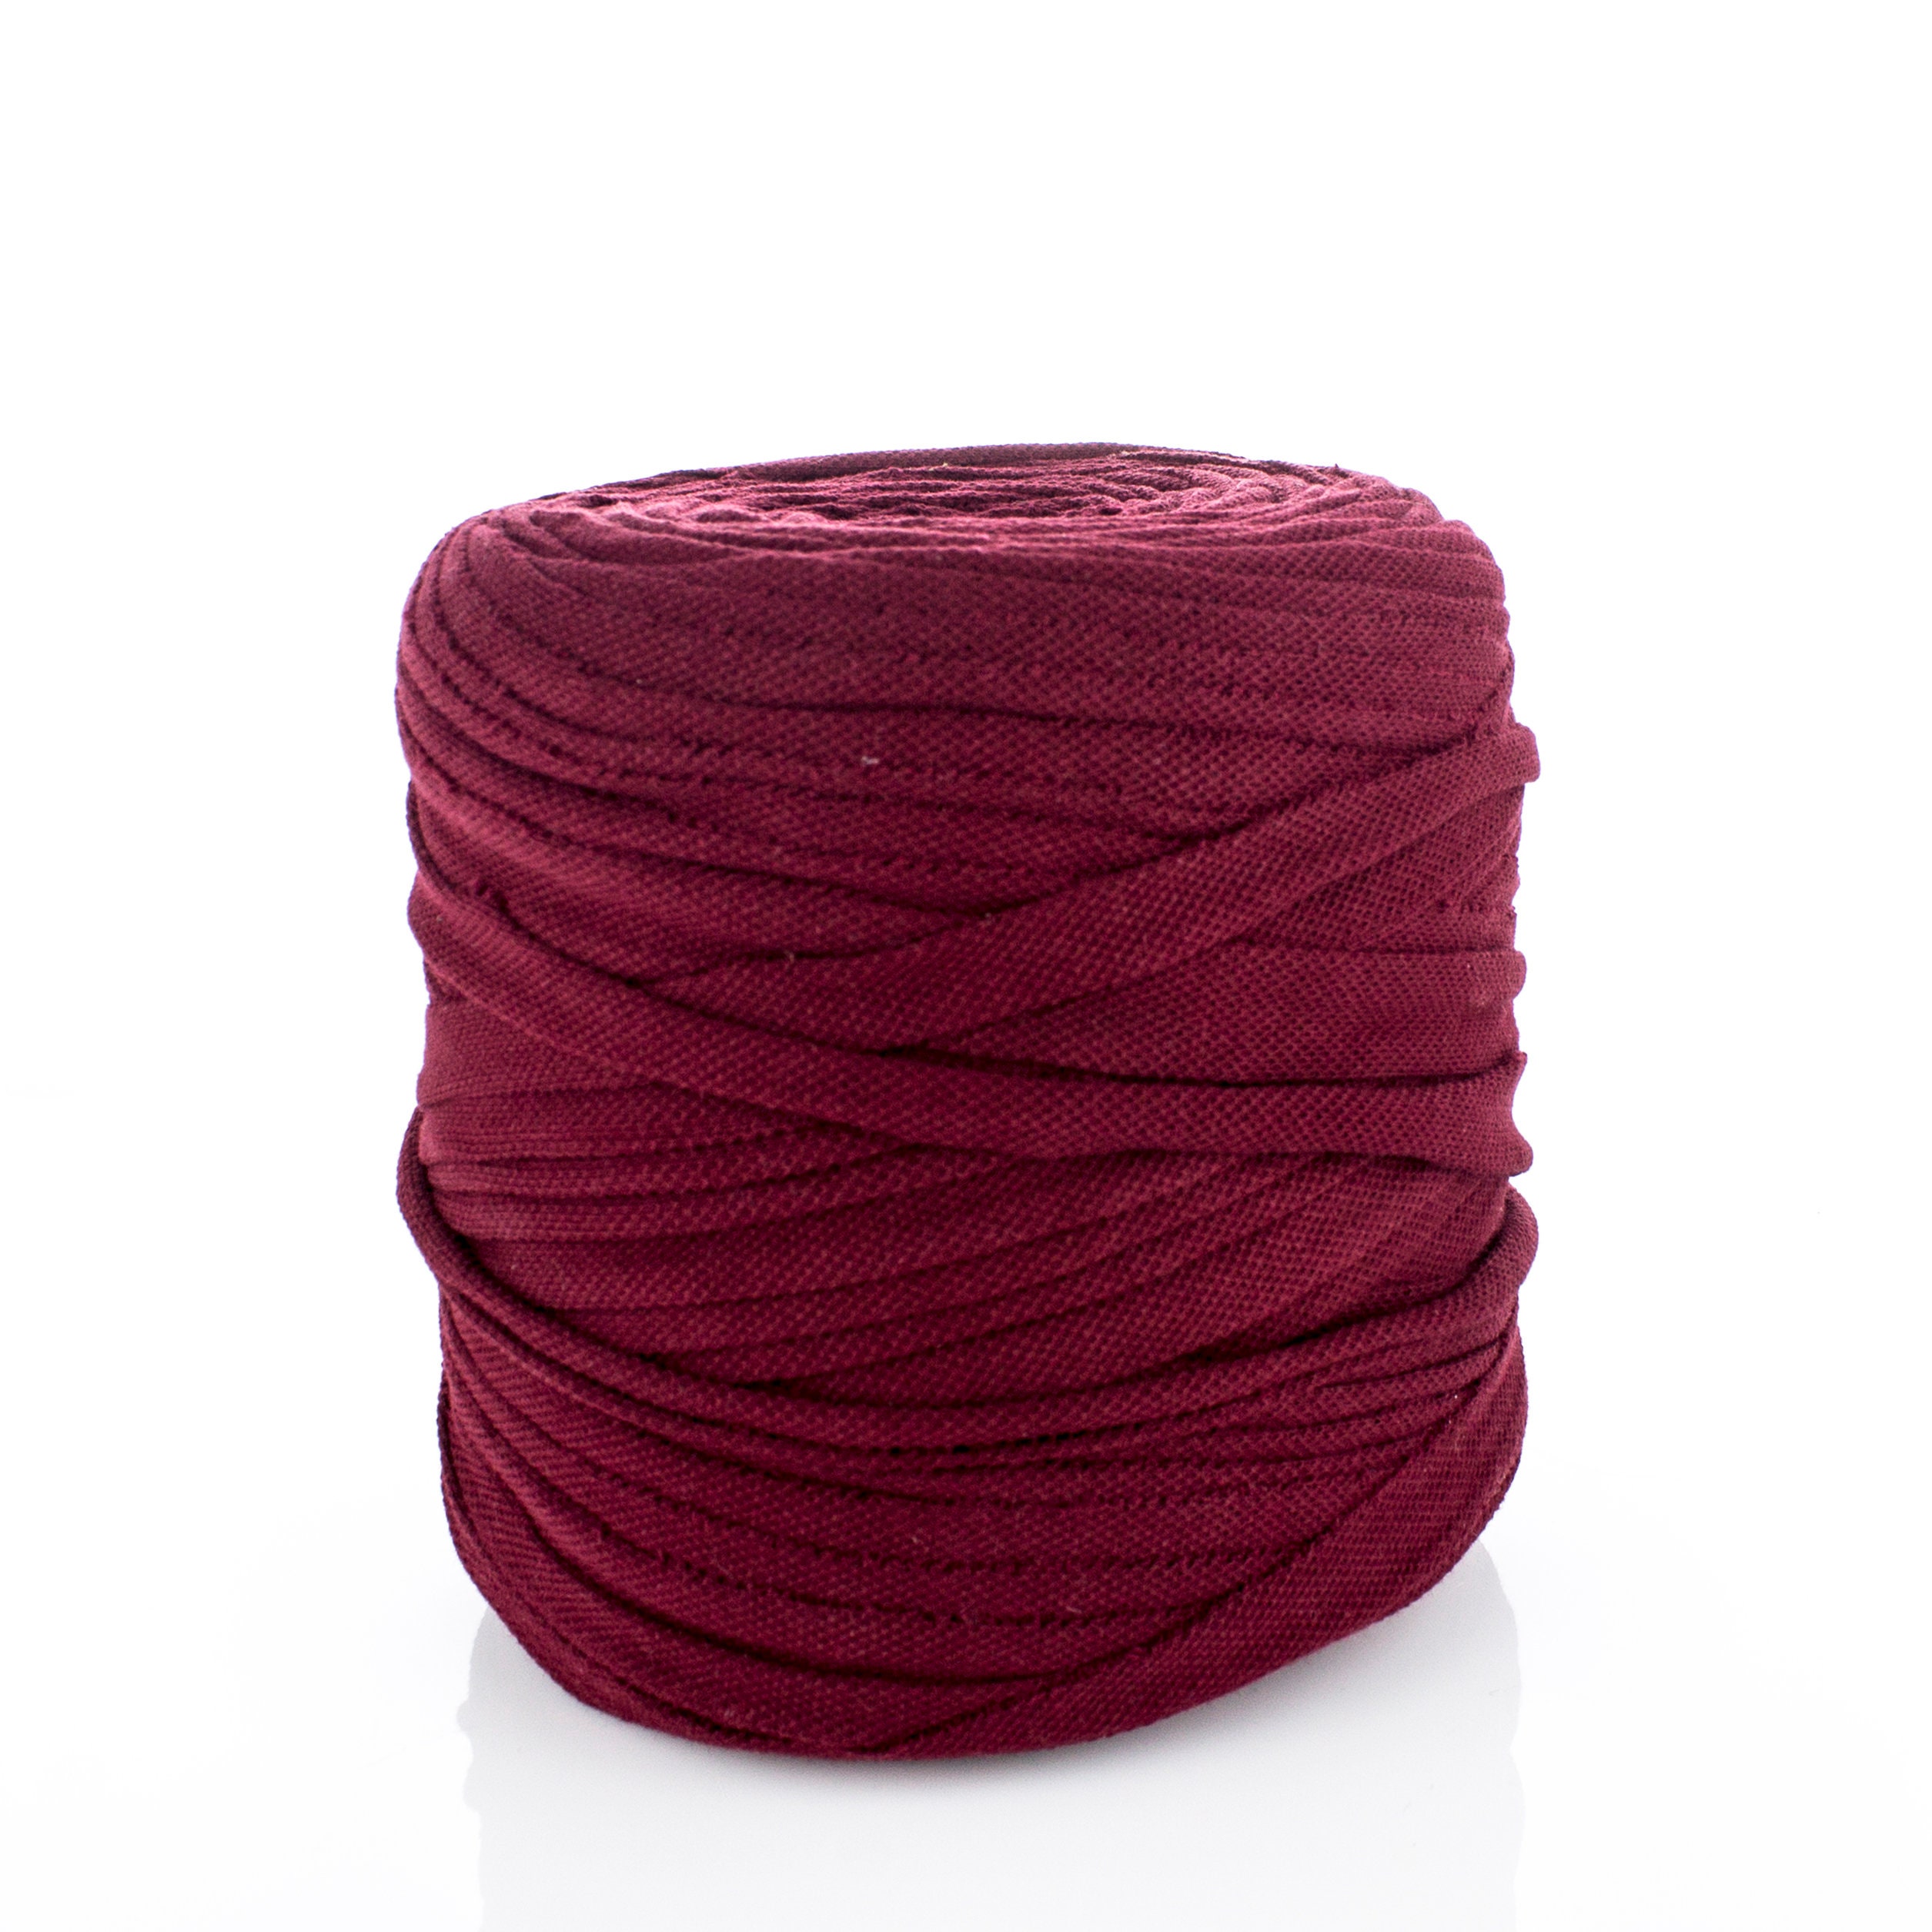 T-shirt Yarn. Crochet Cotton Yarn. Textile Yarn. Cotton Yarn for Crocheting  and Knitting Baskets, Bags, Rugs, Poufs. Pink T-shirt Yarn. 